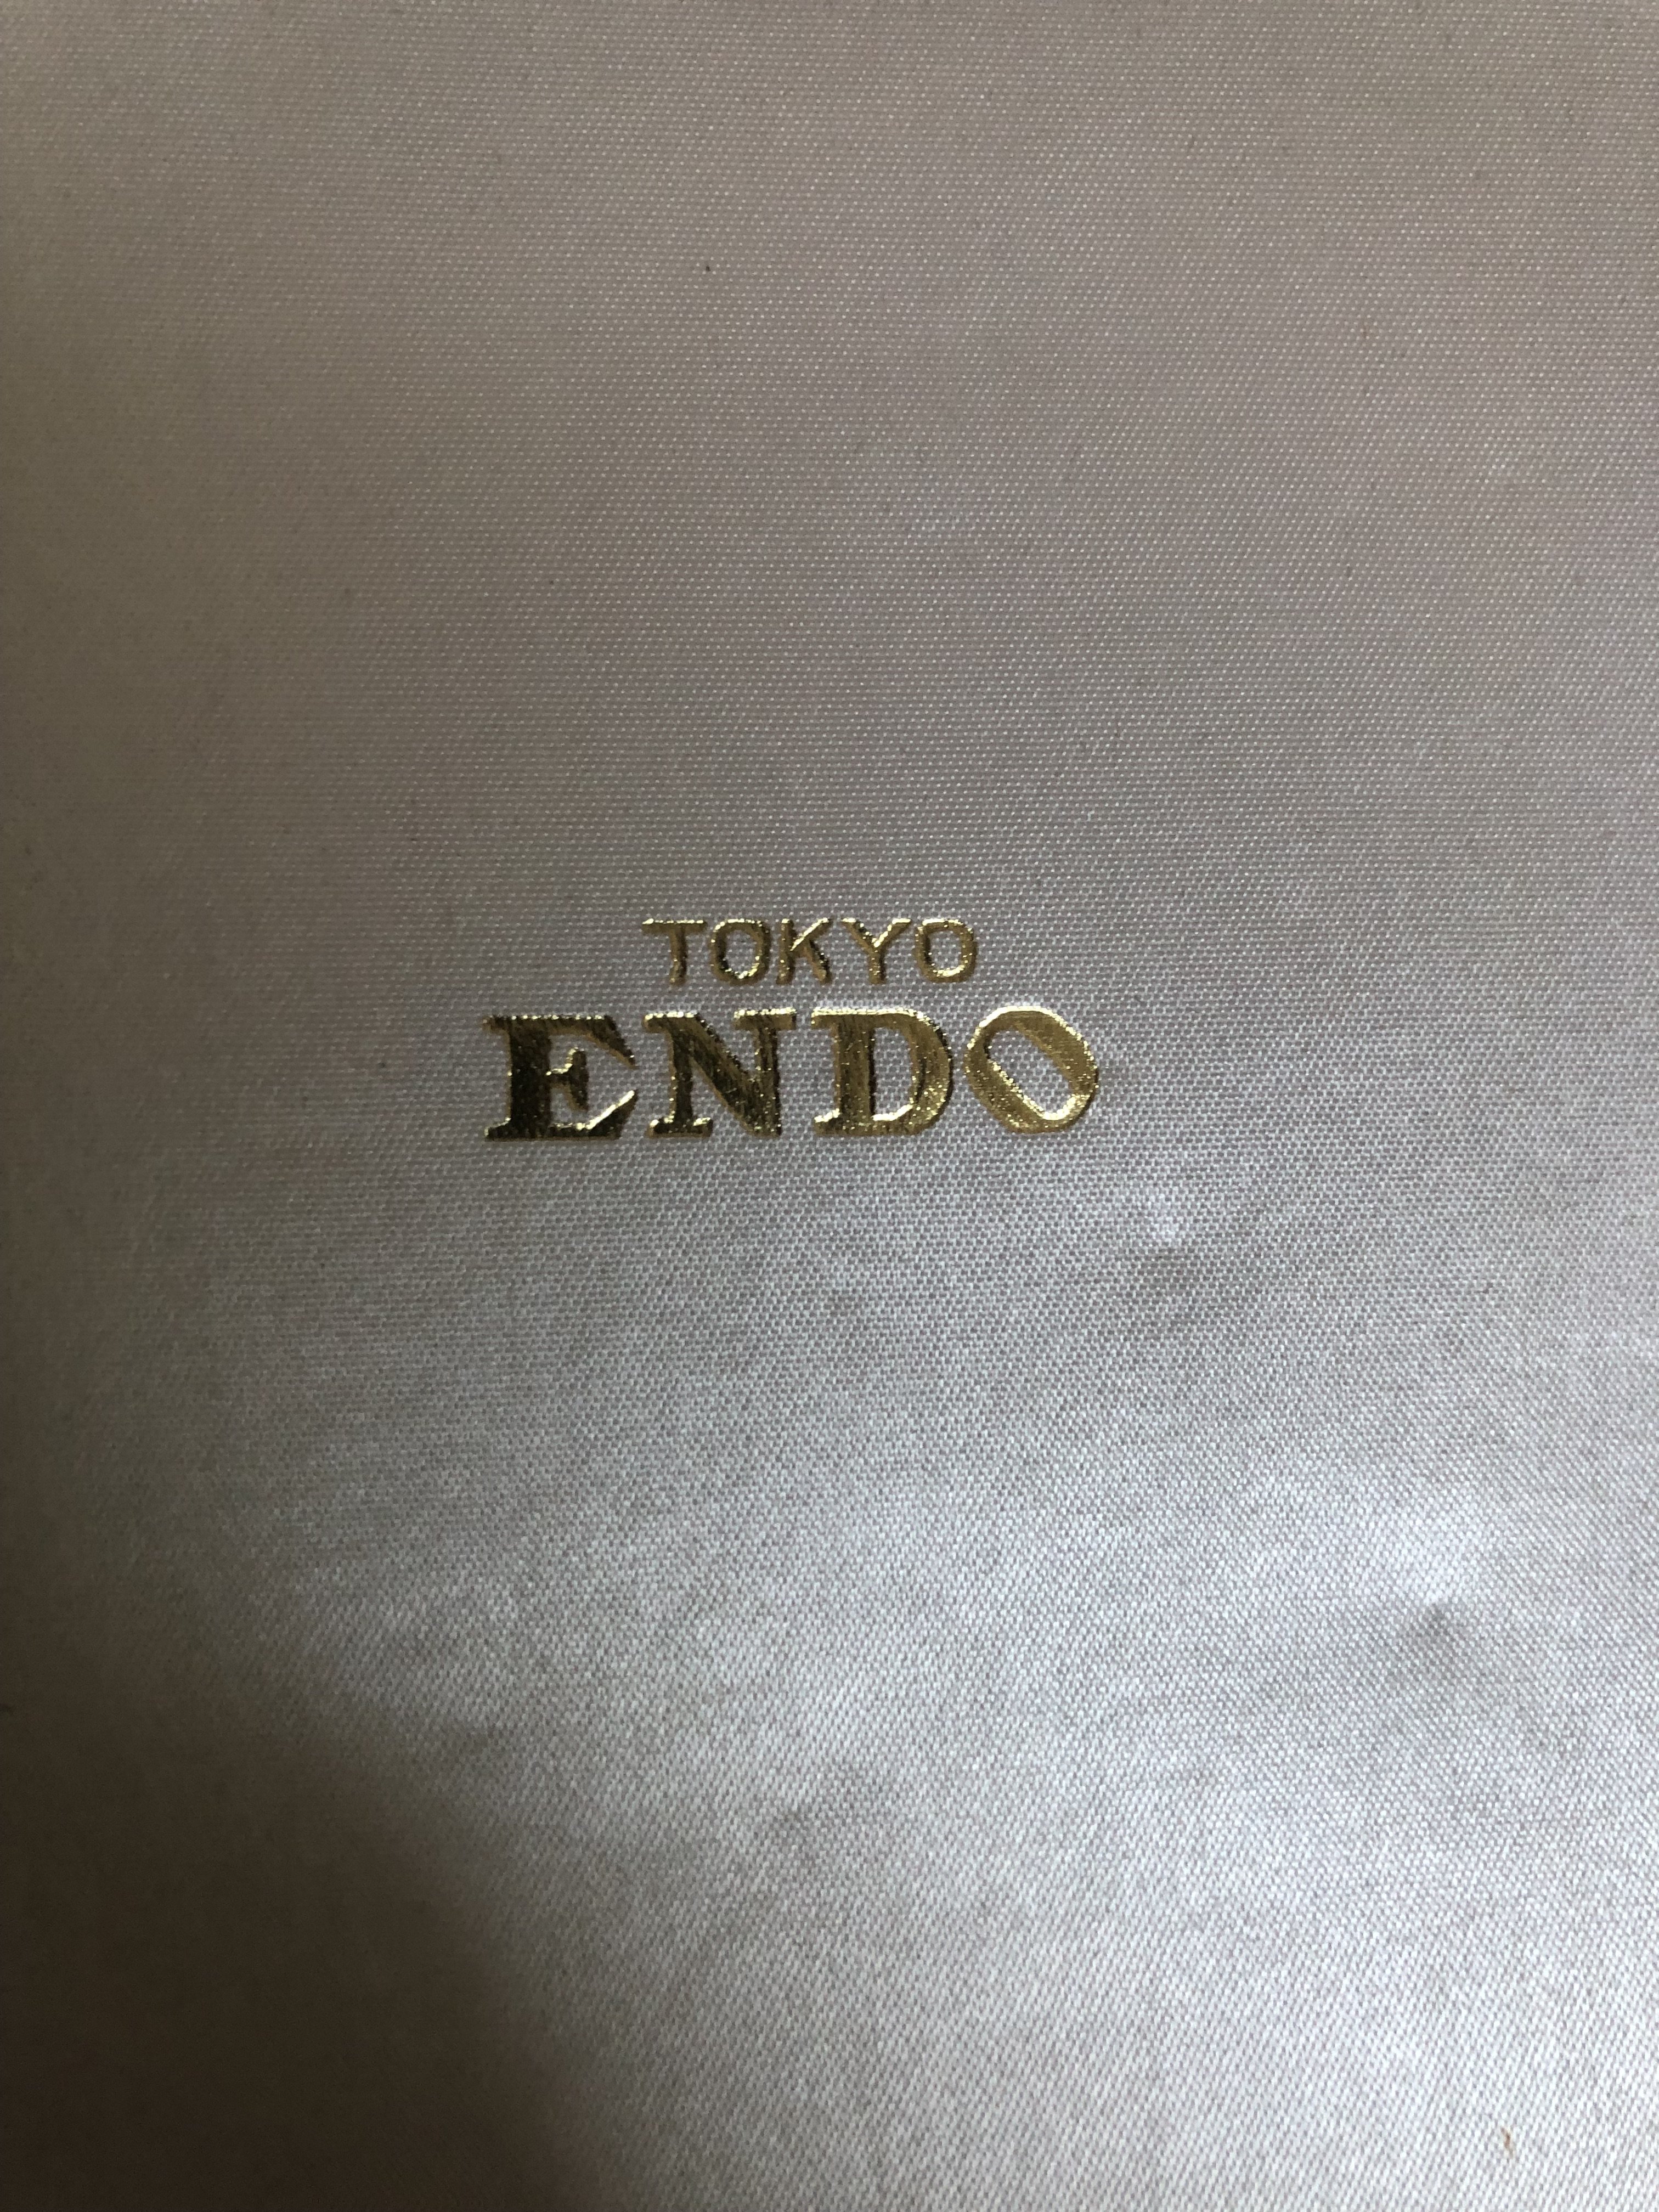 the original box states the store was Endo Tokyo